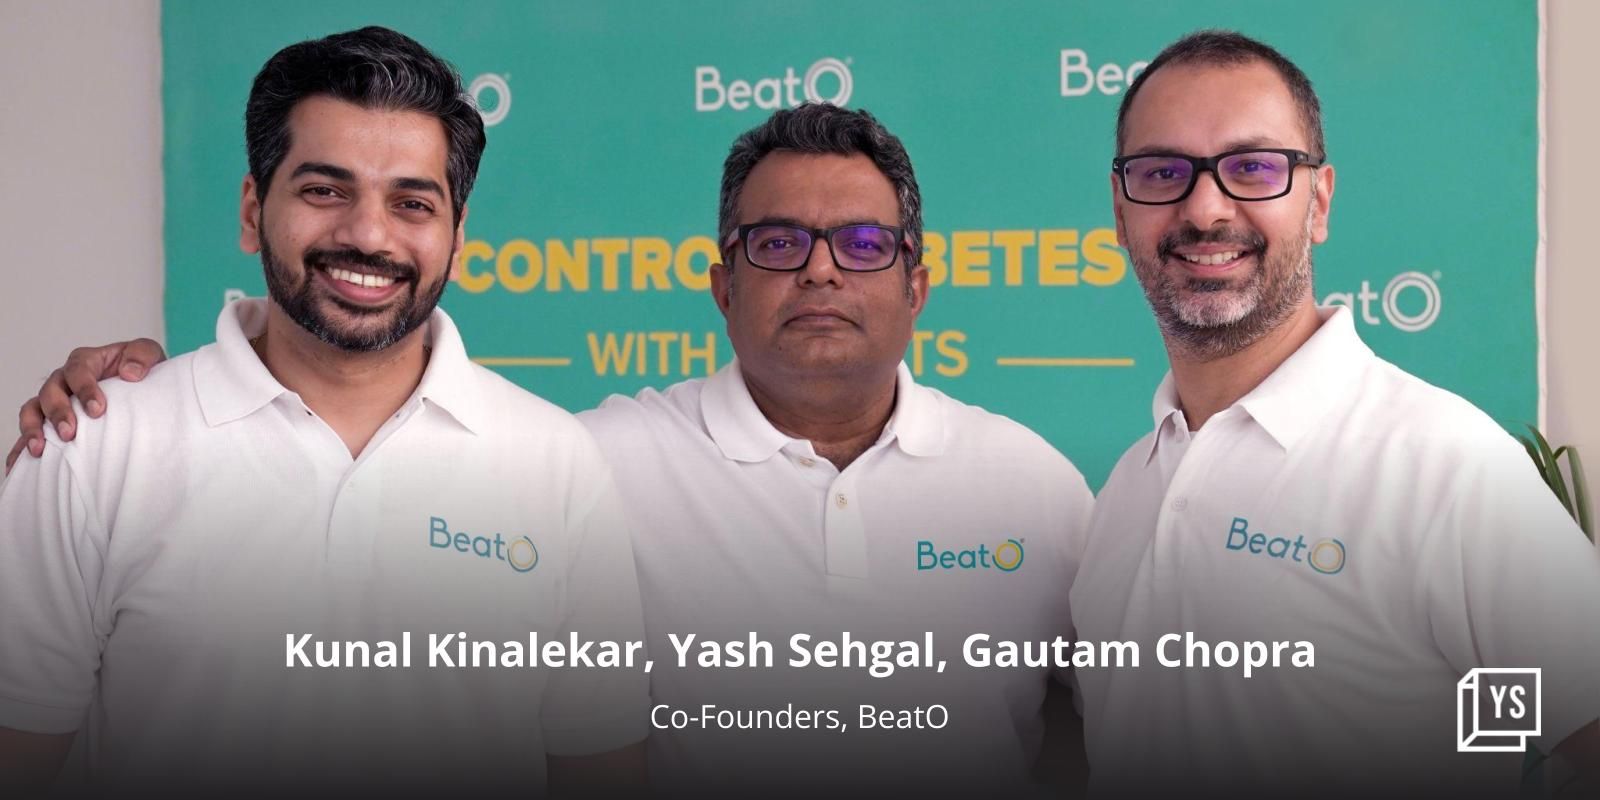 Diabetes care platform BeatO raises $33M from Lightrock, Flipkart Ventures